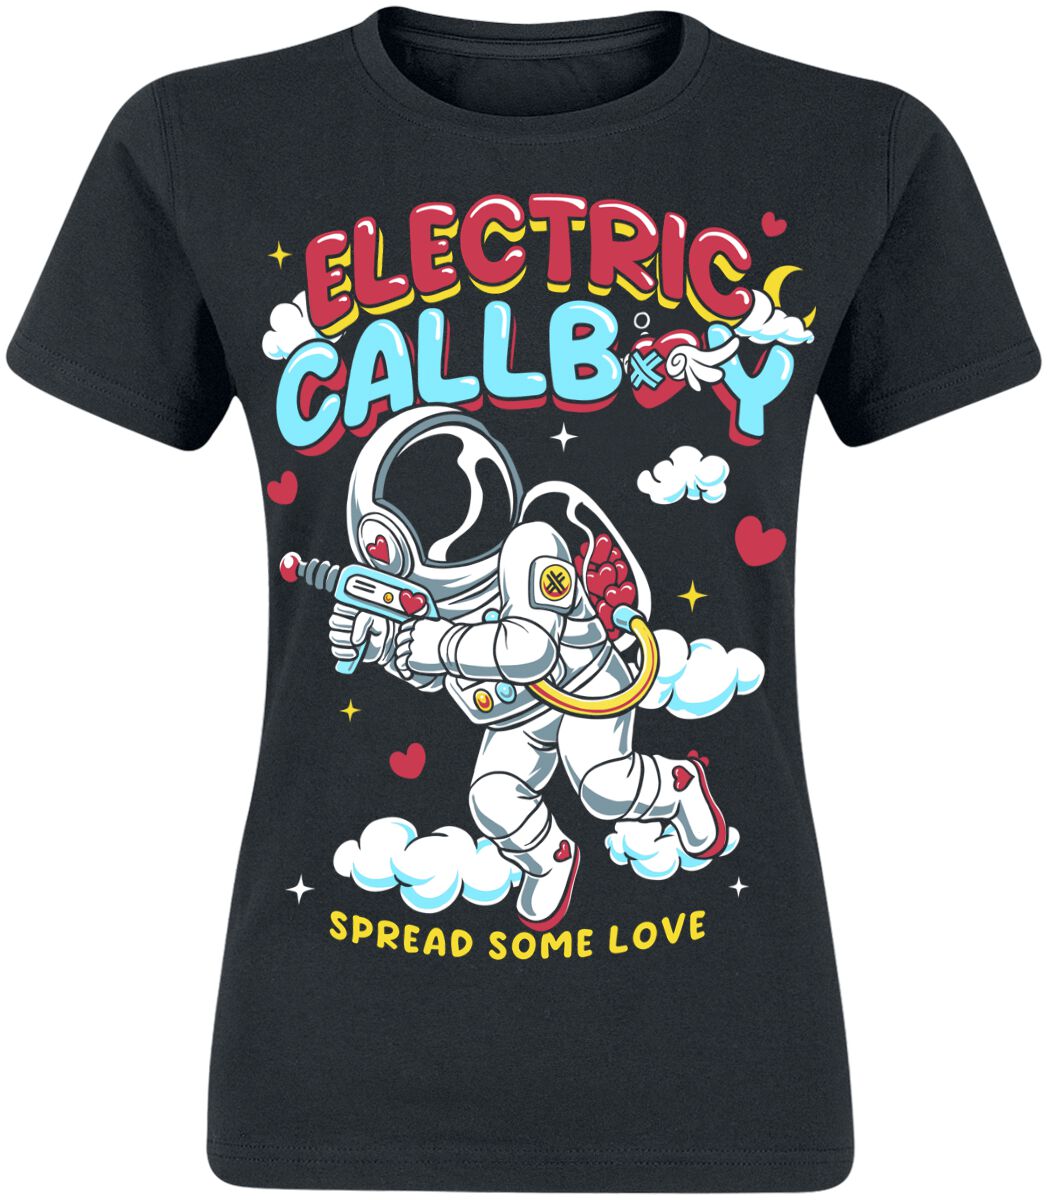 Electric Callboy Spread Some Love T-Shirt schwarz in XXL